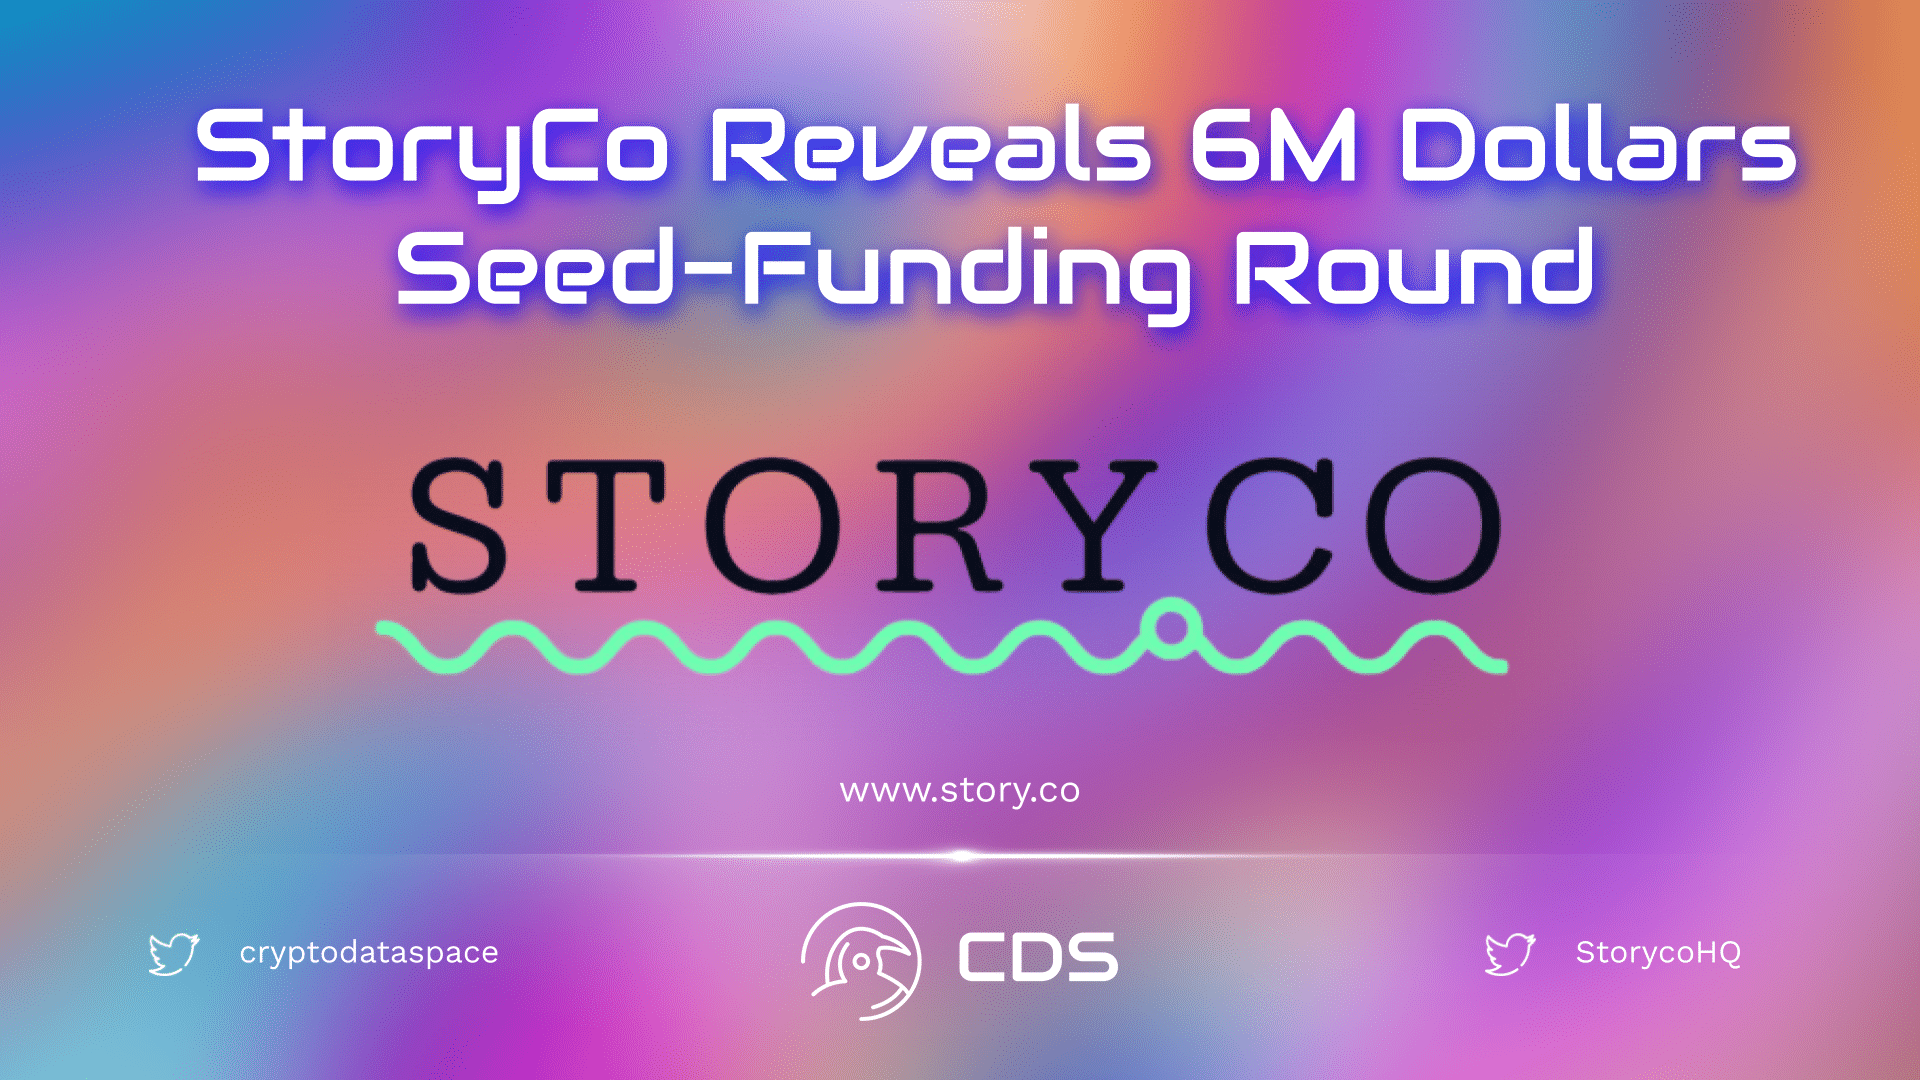 StoryCo Reveals 6M Dollars Seed-Funding Round